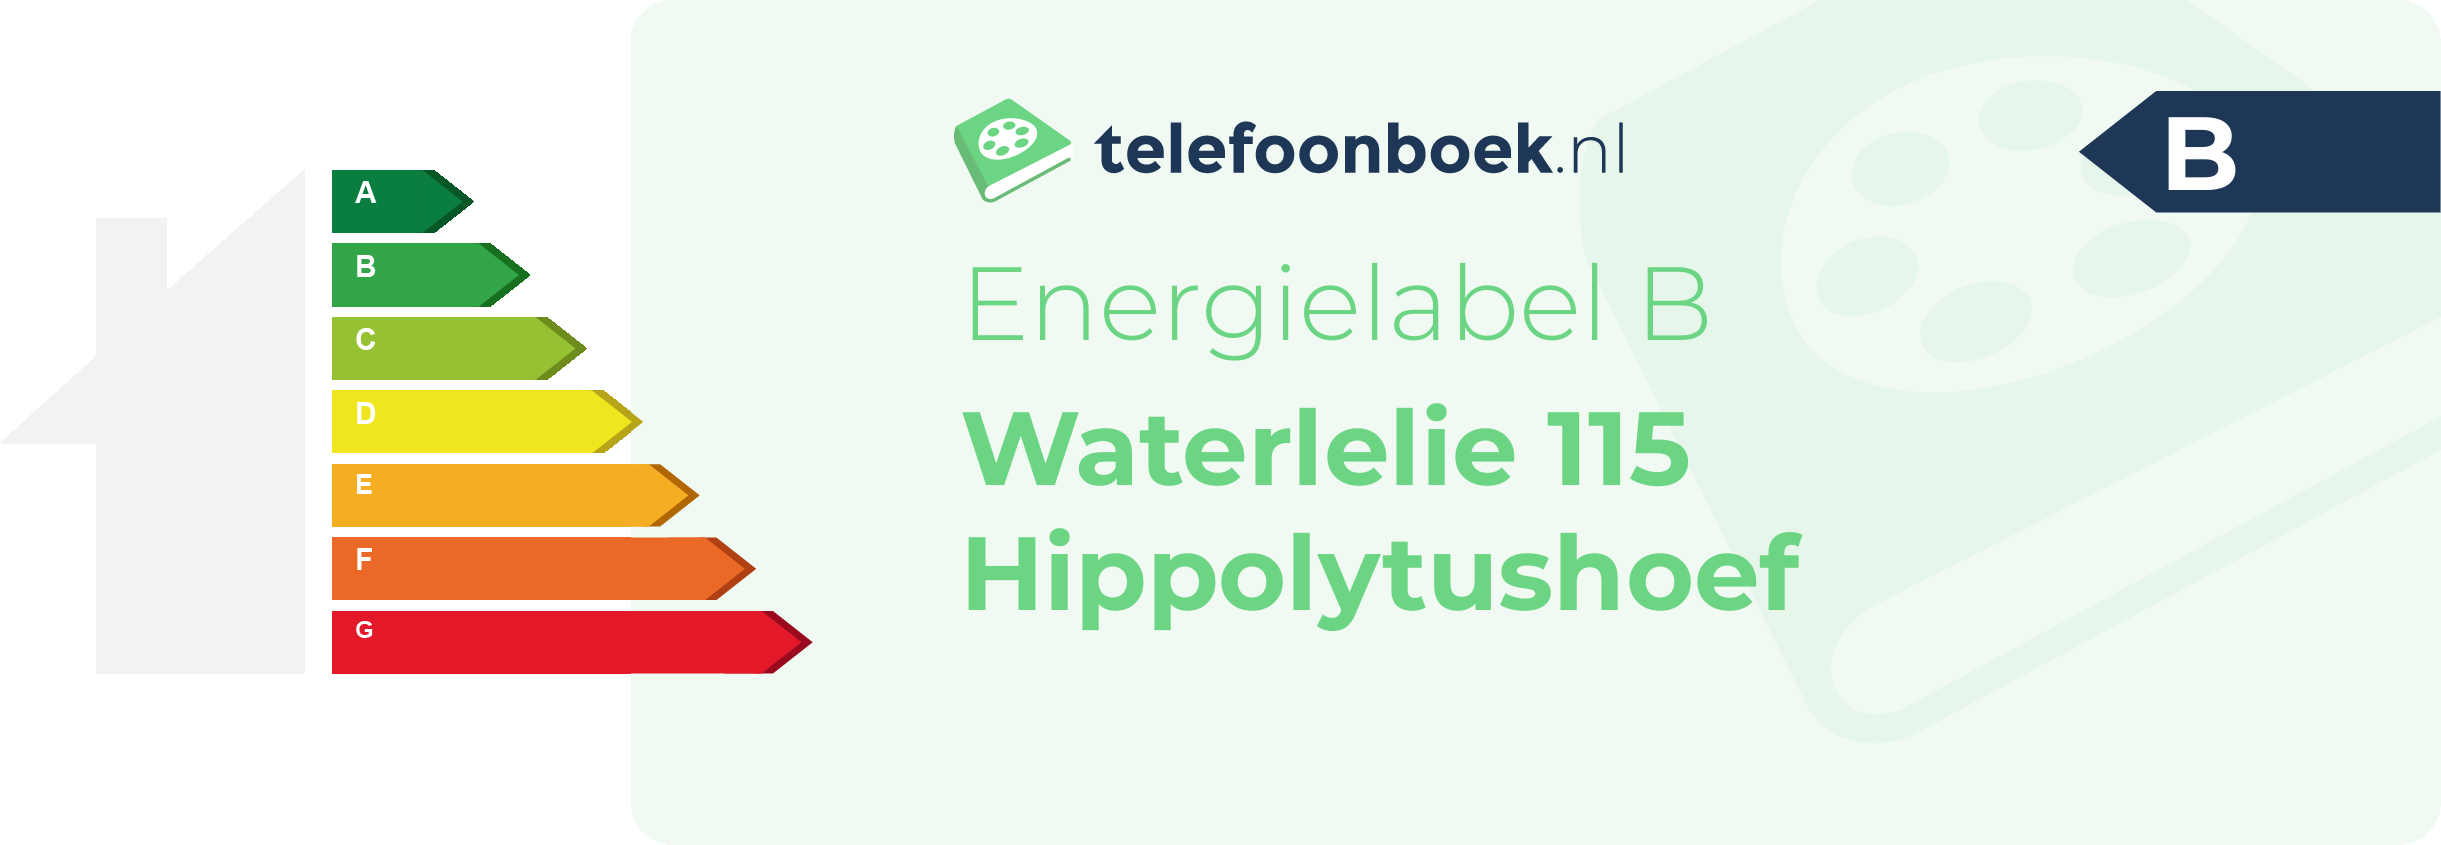 Energielabel Waterlelie 115 Hippolytushoef